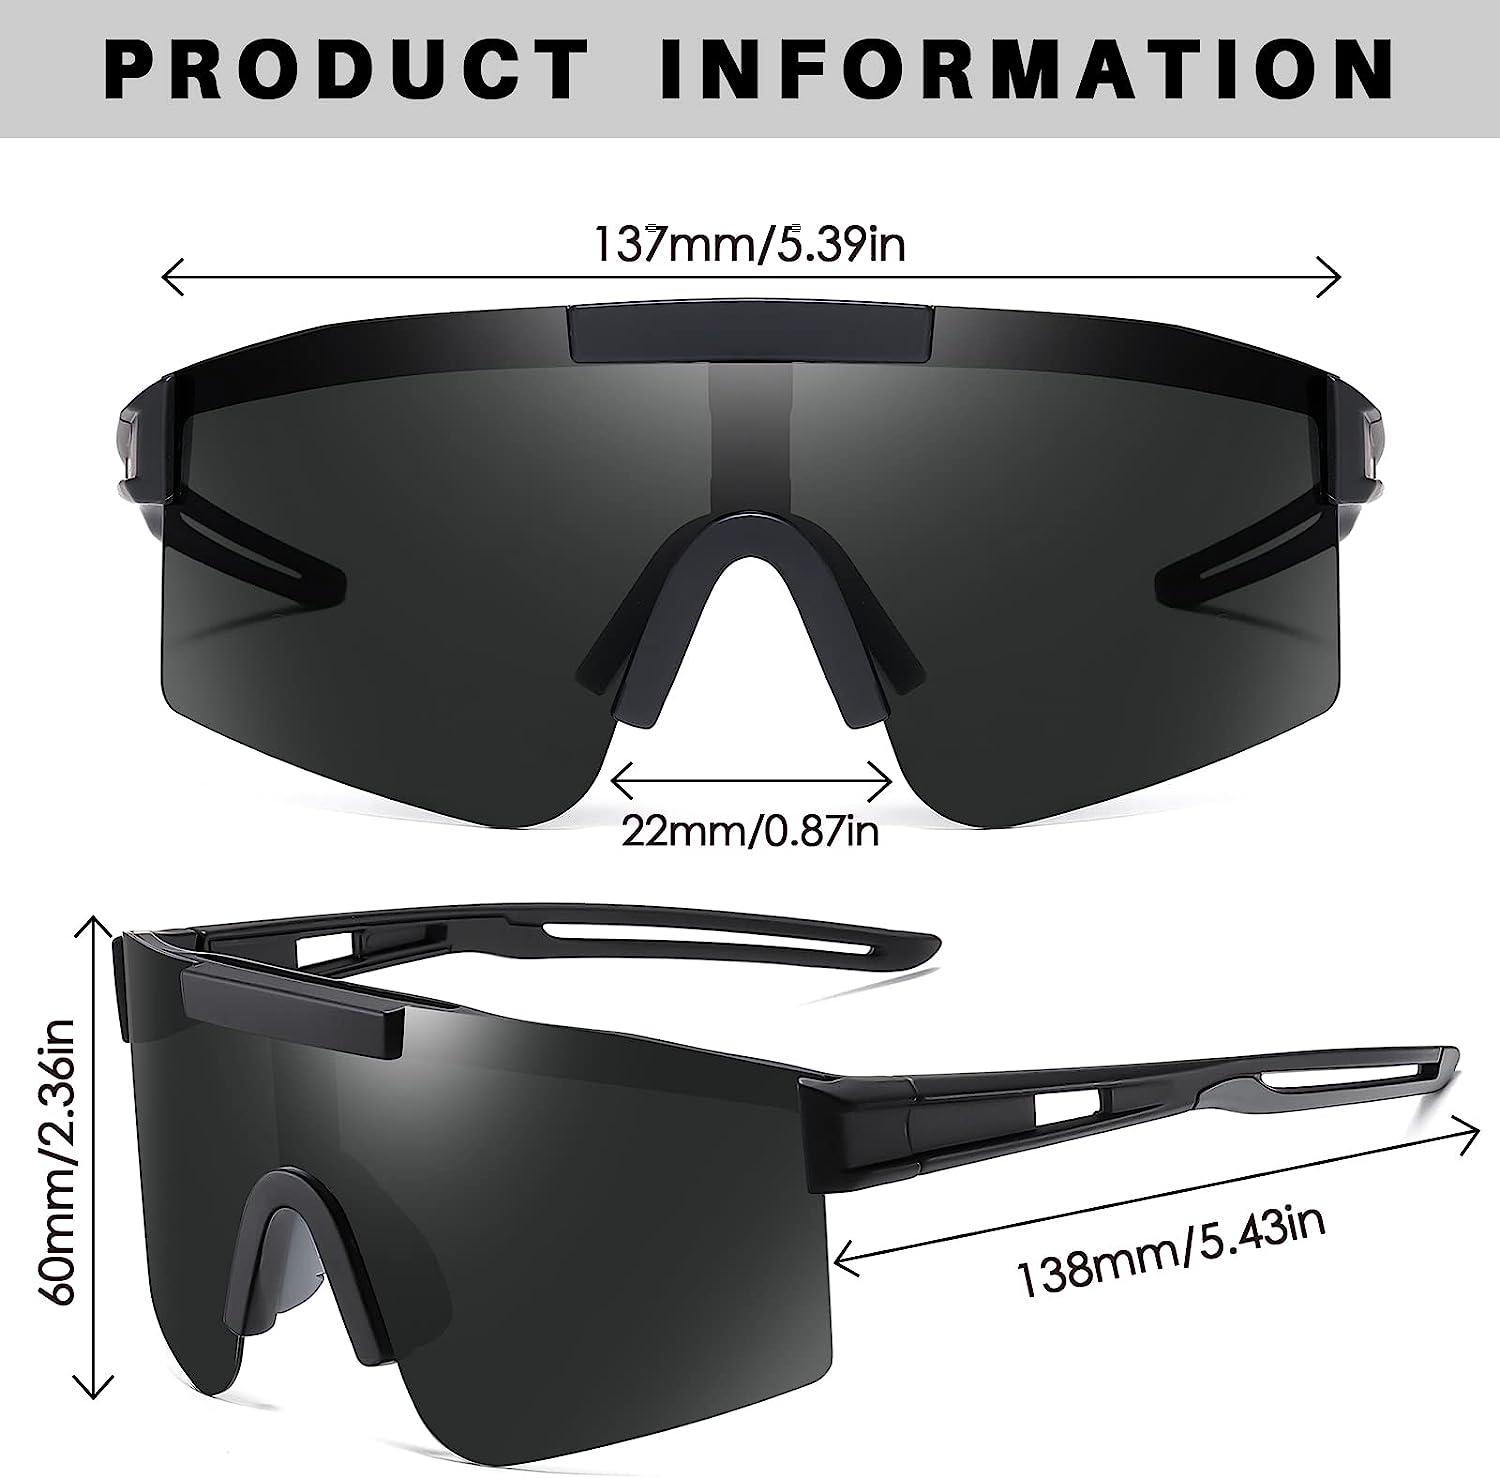 Men's Polarized Sunglasses Outdoor Sports Cycling Sunglasses Driver Driving Fishing Glasses UV400,Sun Glasses,Googles Pit Vipers,Goggles Sunglasses